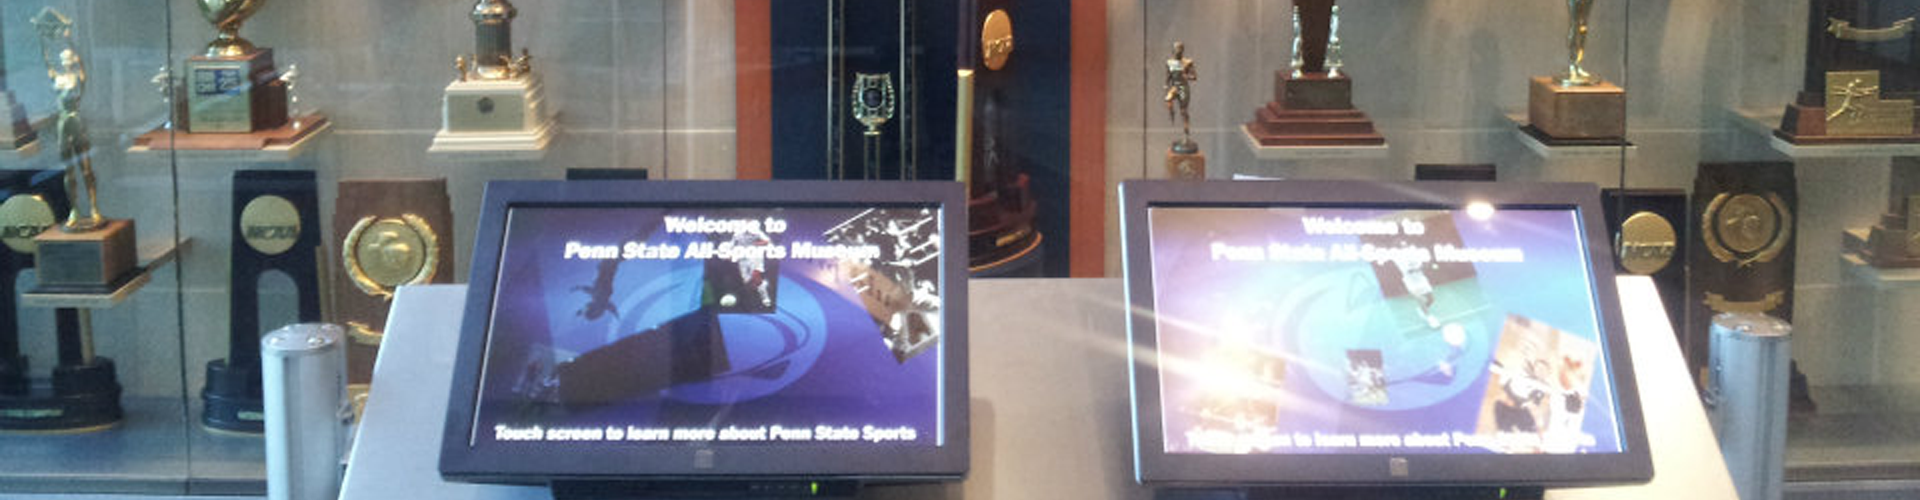 Penn State Sports Hall of Fame Digital Trophy